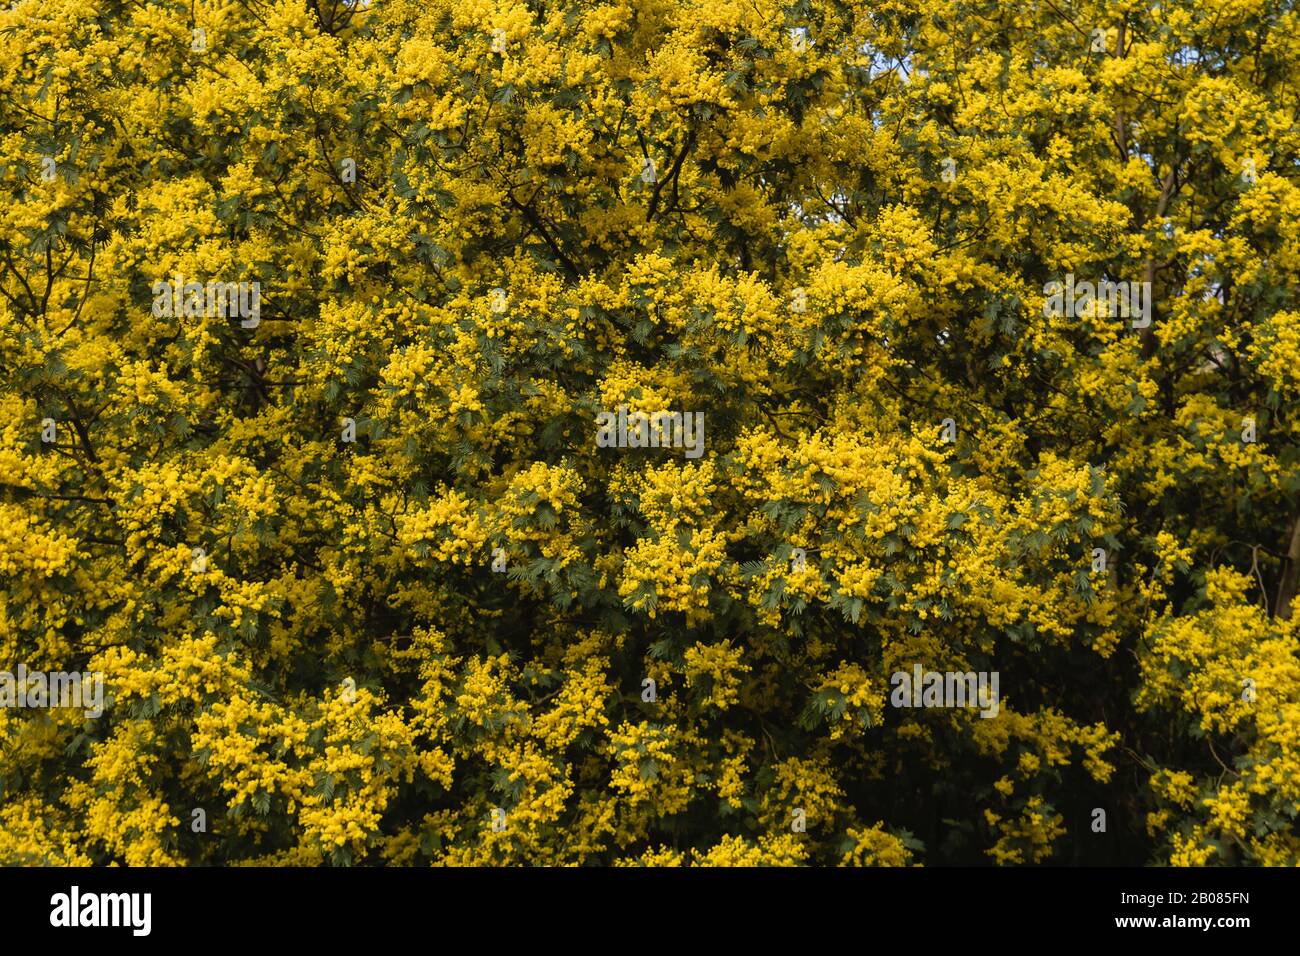 Detail of acacia dealbata yellow flowers blooming Stock Photo